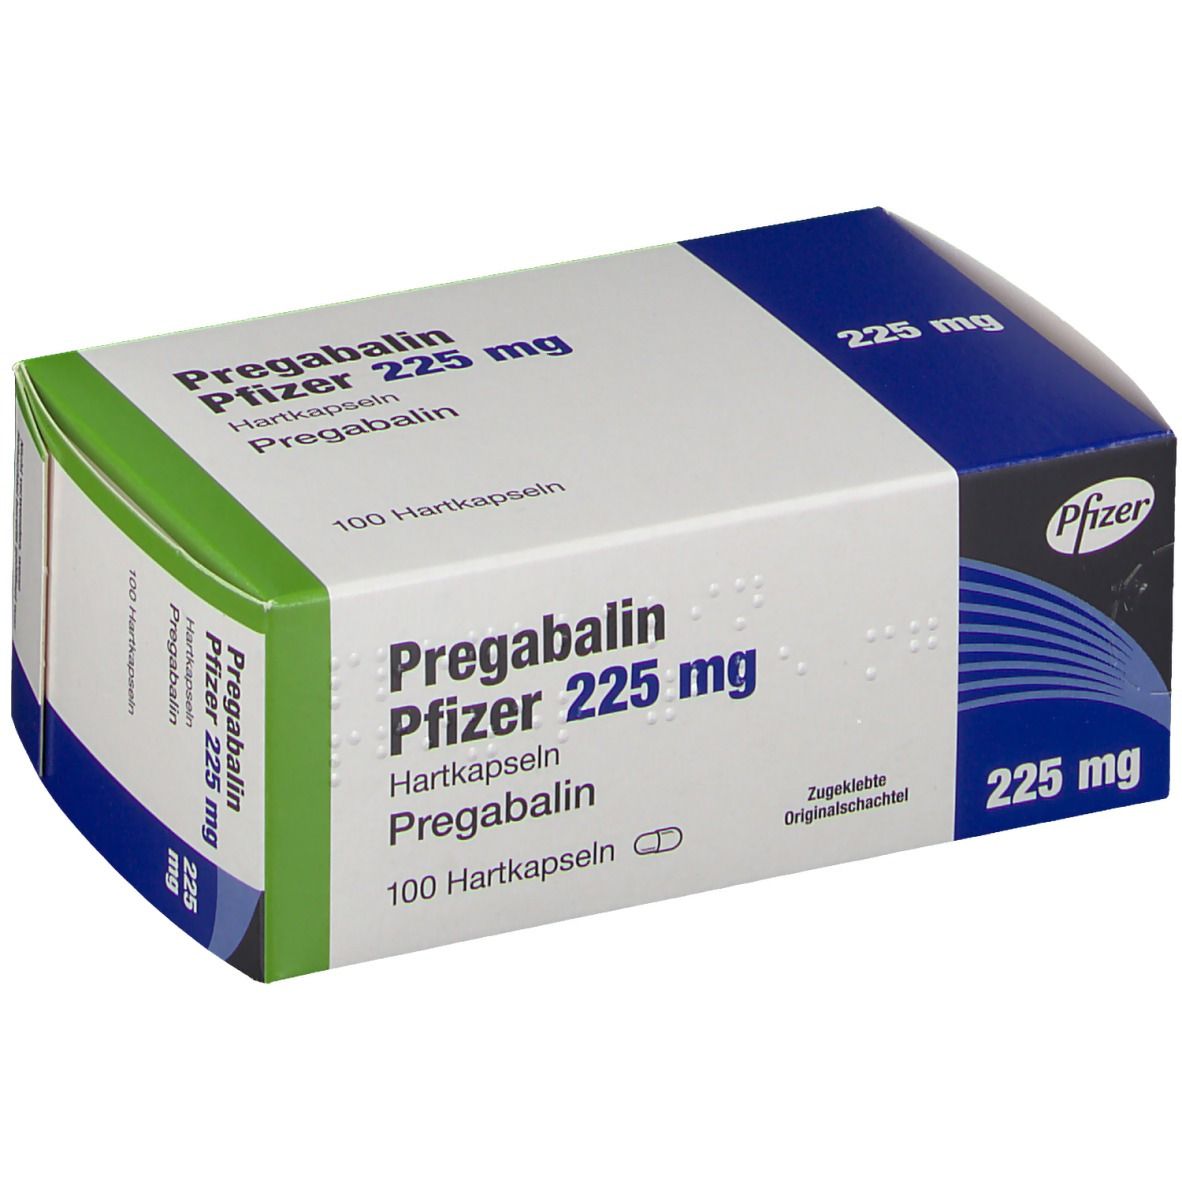 Pregabalin Pfizer 225 mg